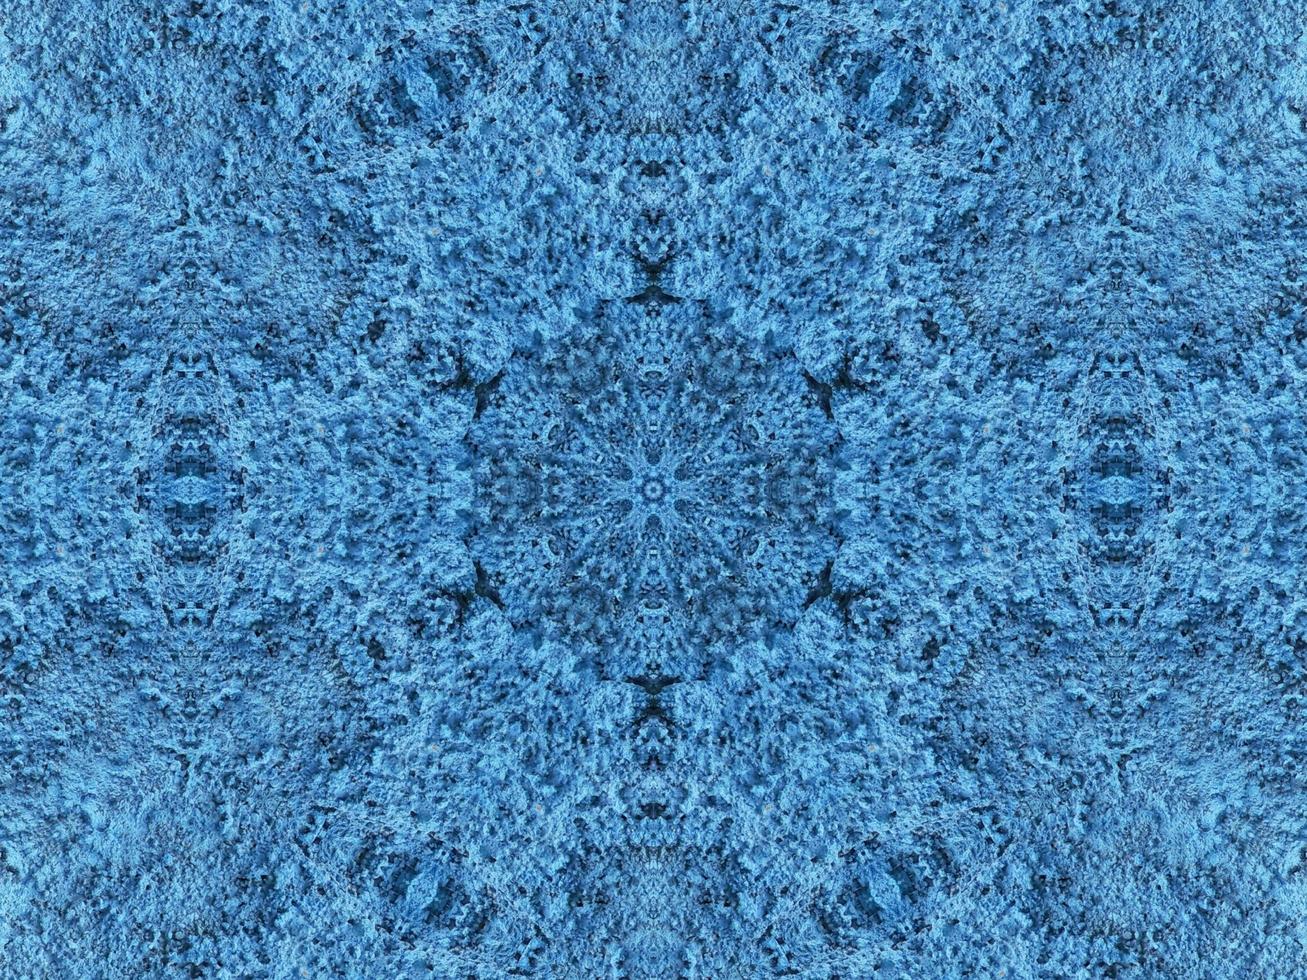 Geometry kaleidoscope pattern. Light blue abstract background. Free photo. photo